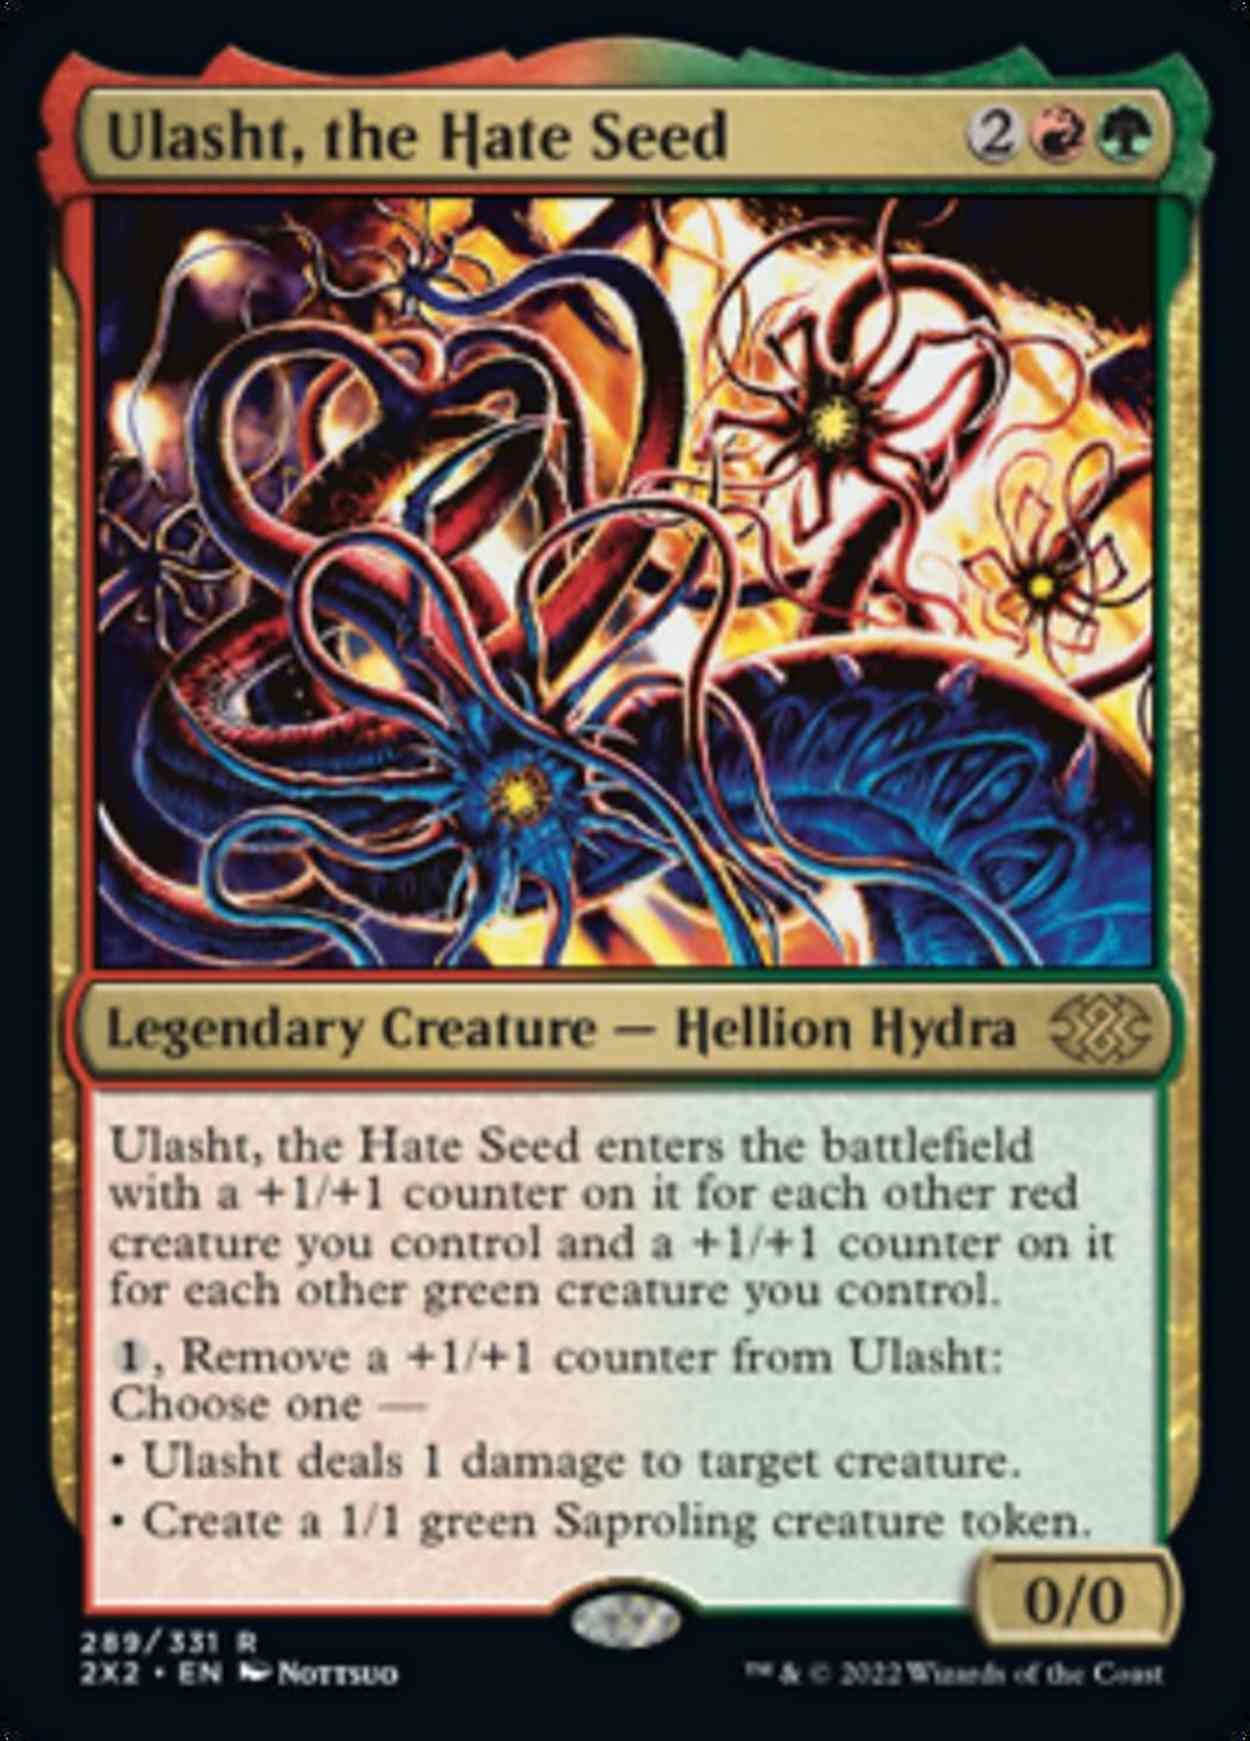 Ulasht, the Hate Seed magic card front